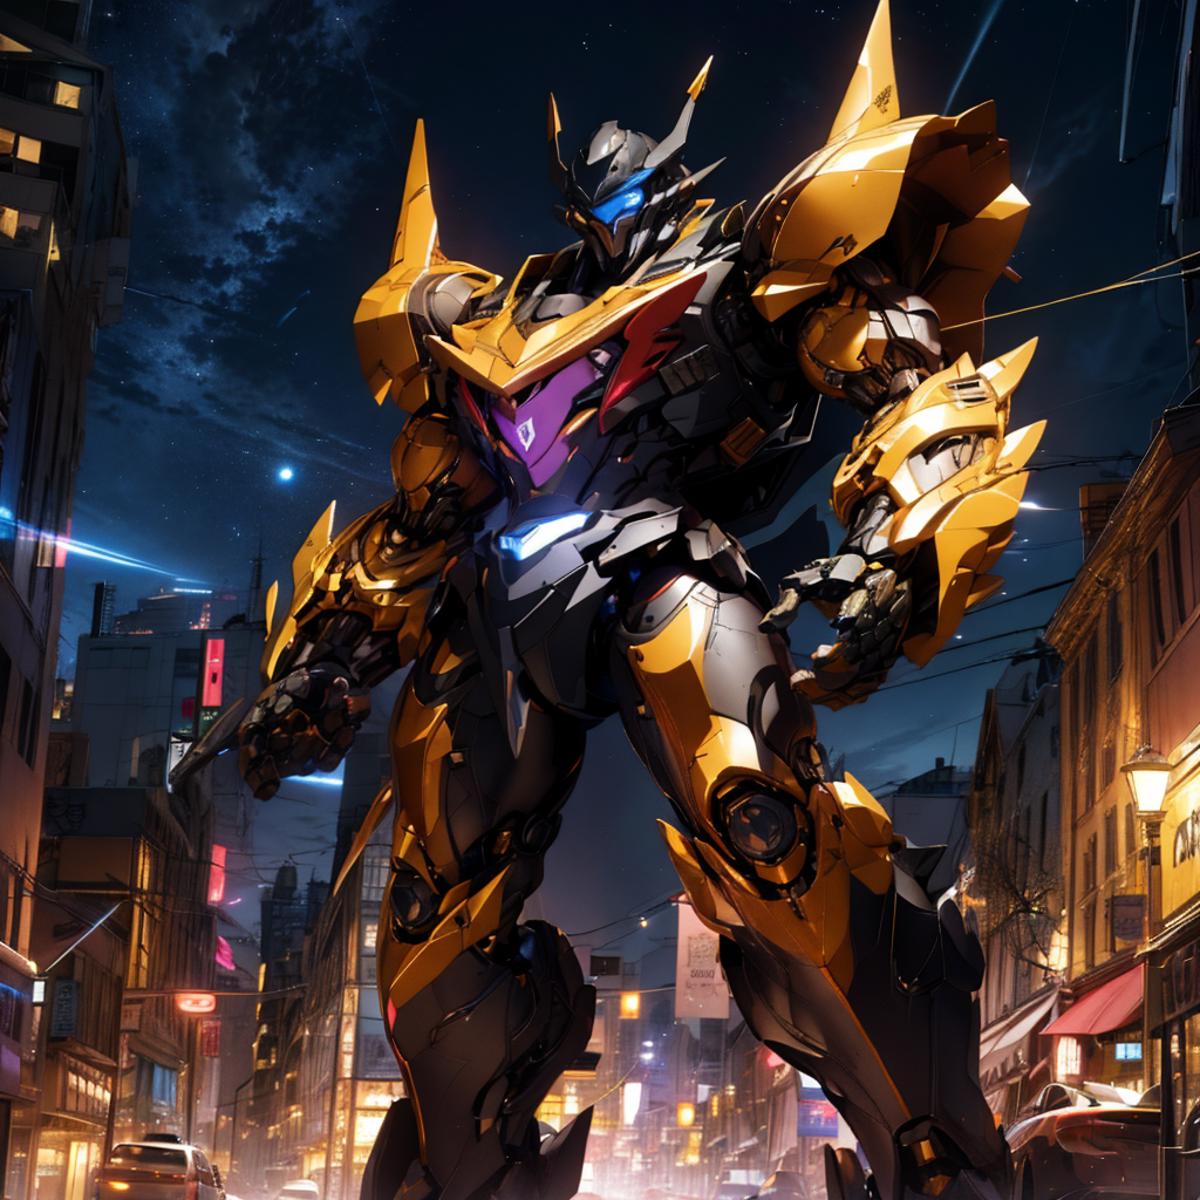 Super robot diffusion(Gundam, EVA, ARMORED CORE, BATTLE TECH like mecha lora) image by holt2